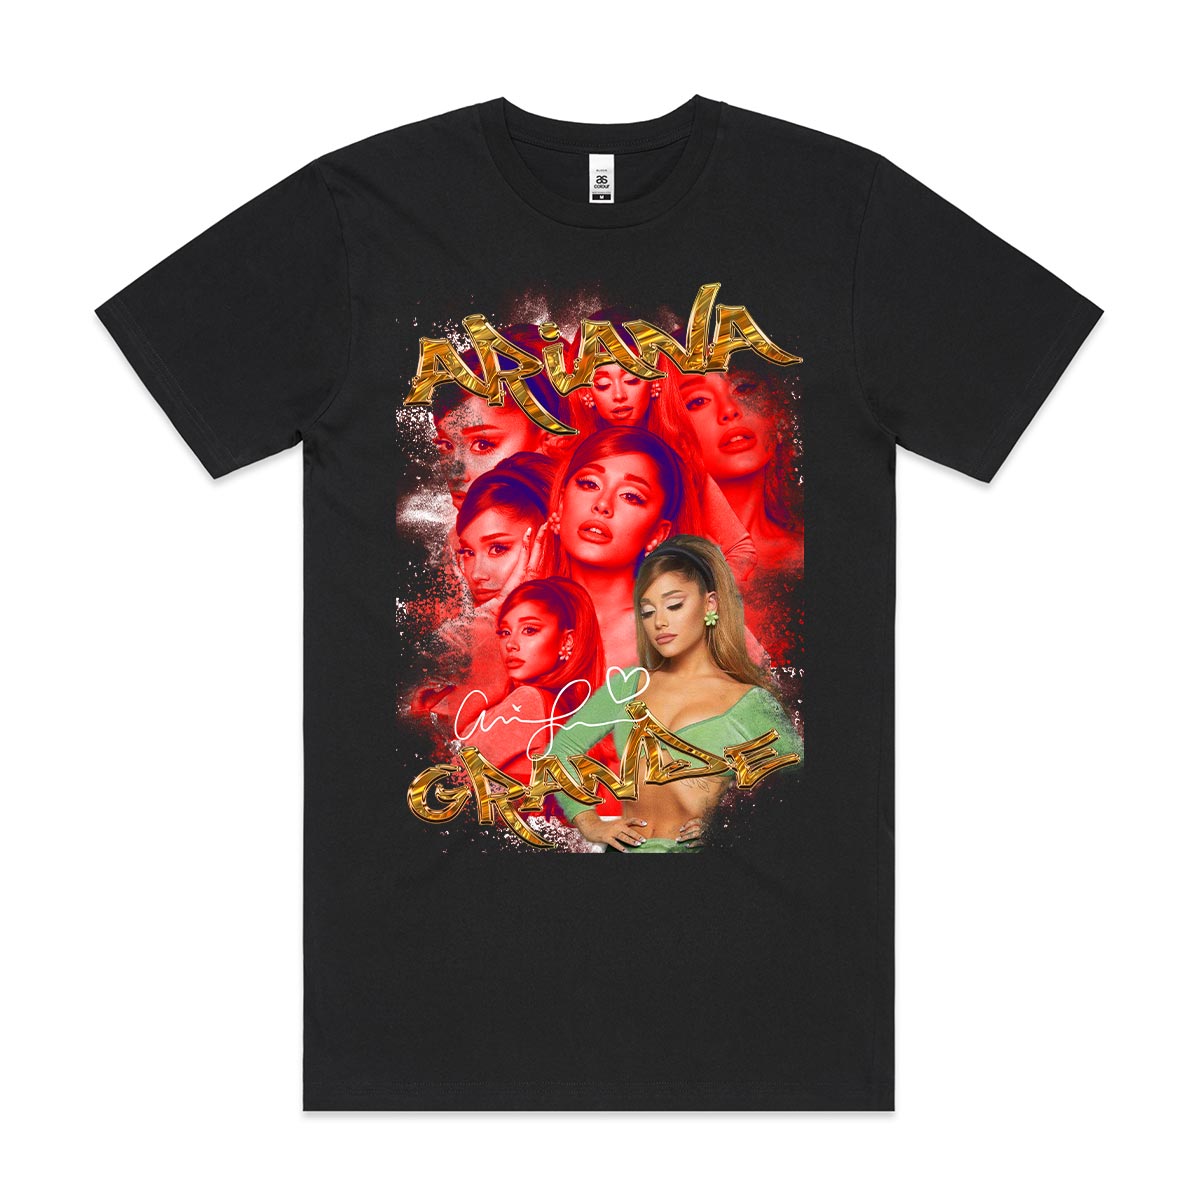 Ariana Grande 03 T-Shirt Artist Family Fan Music Pop Culture